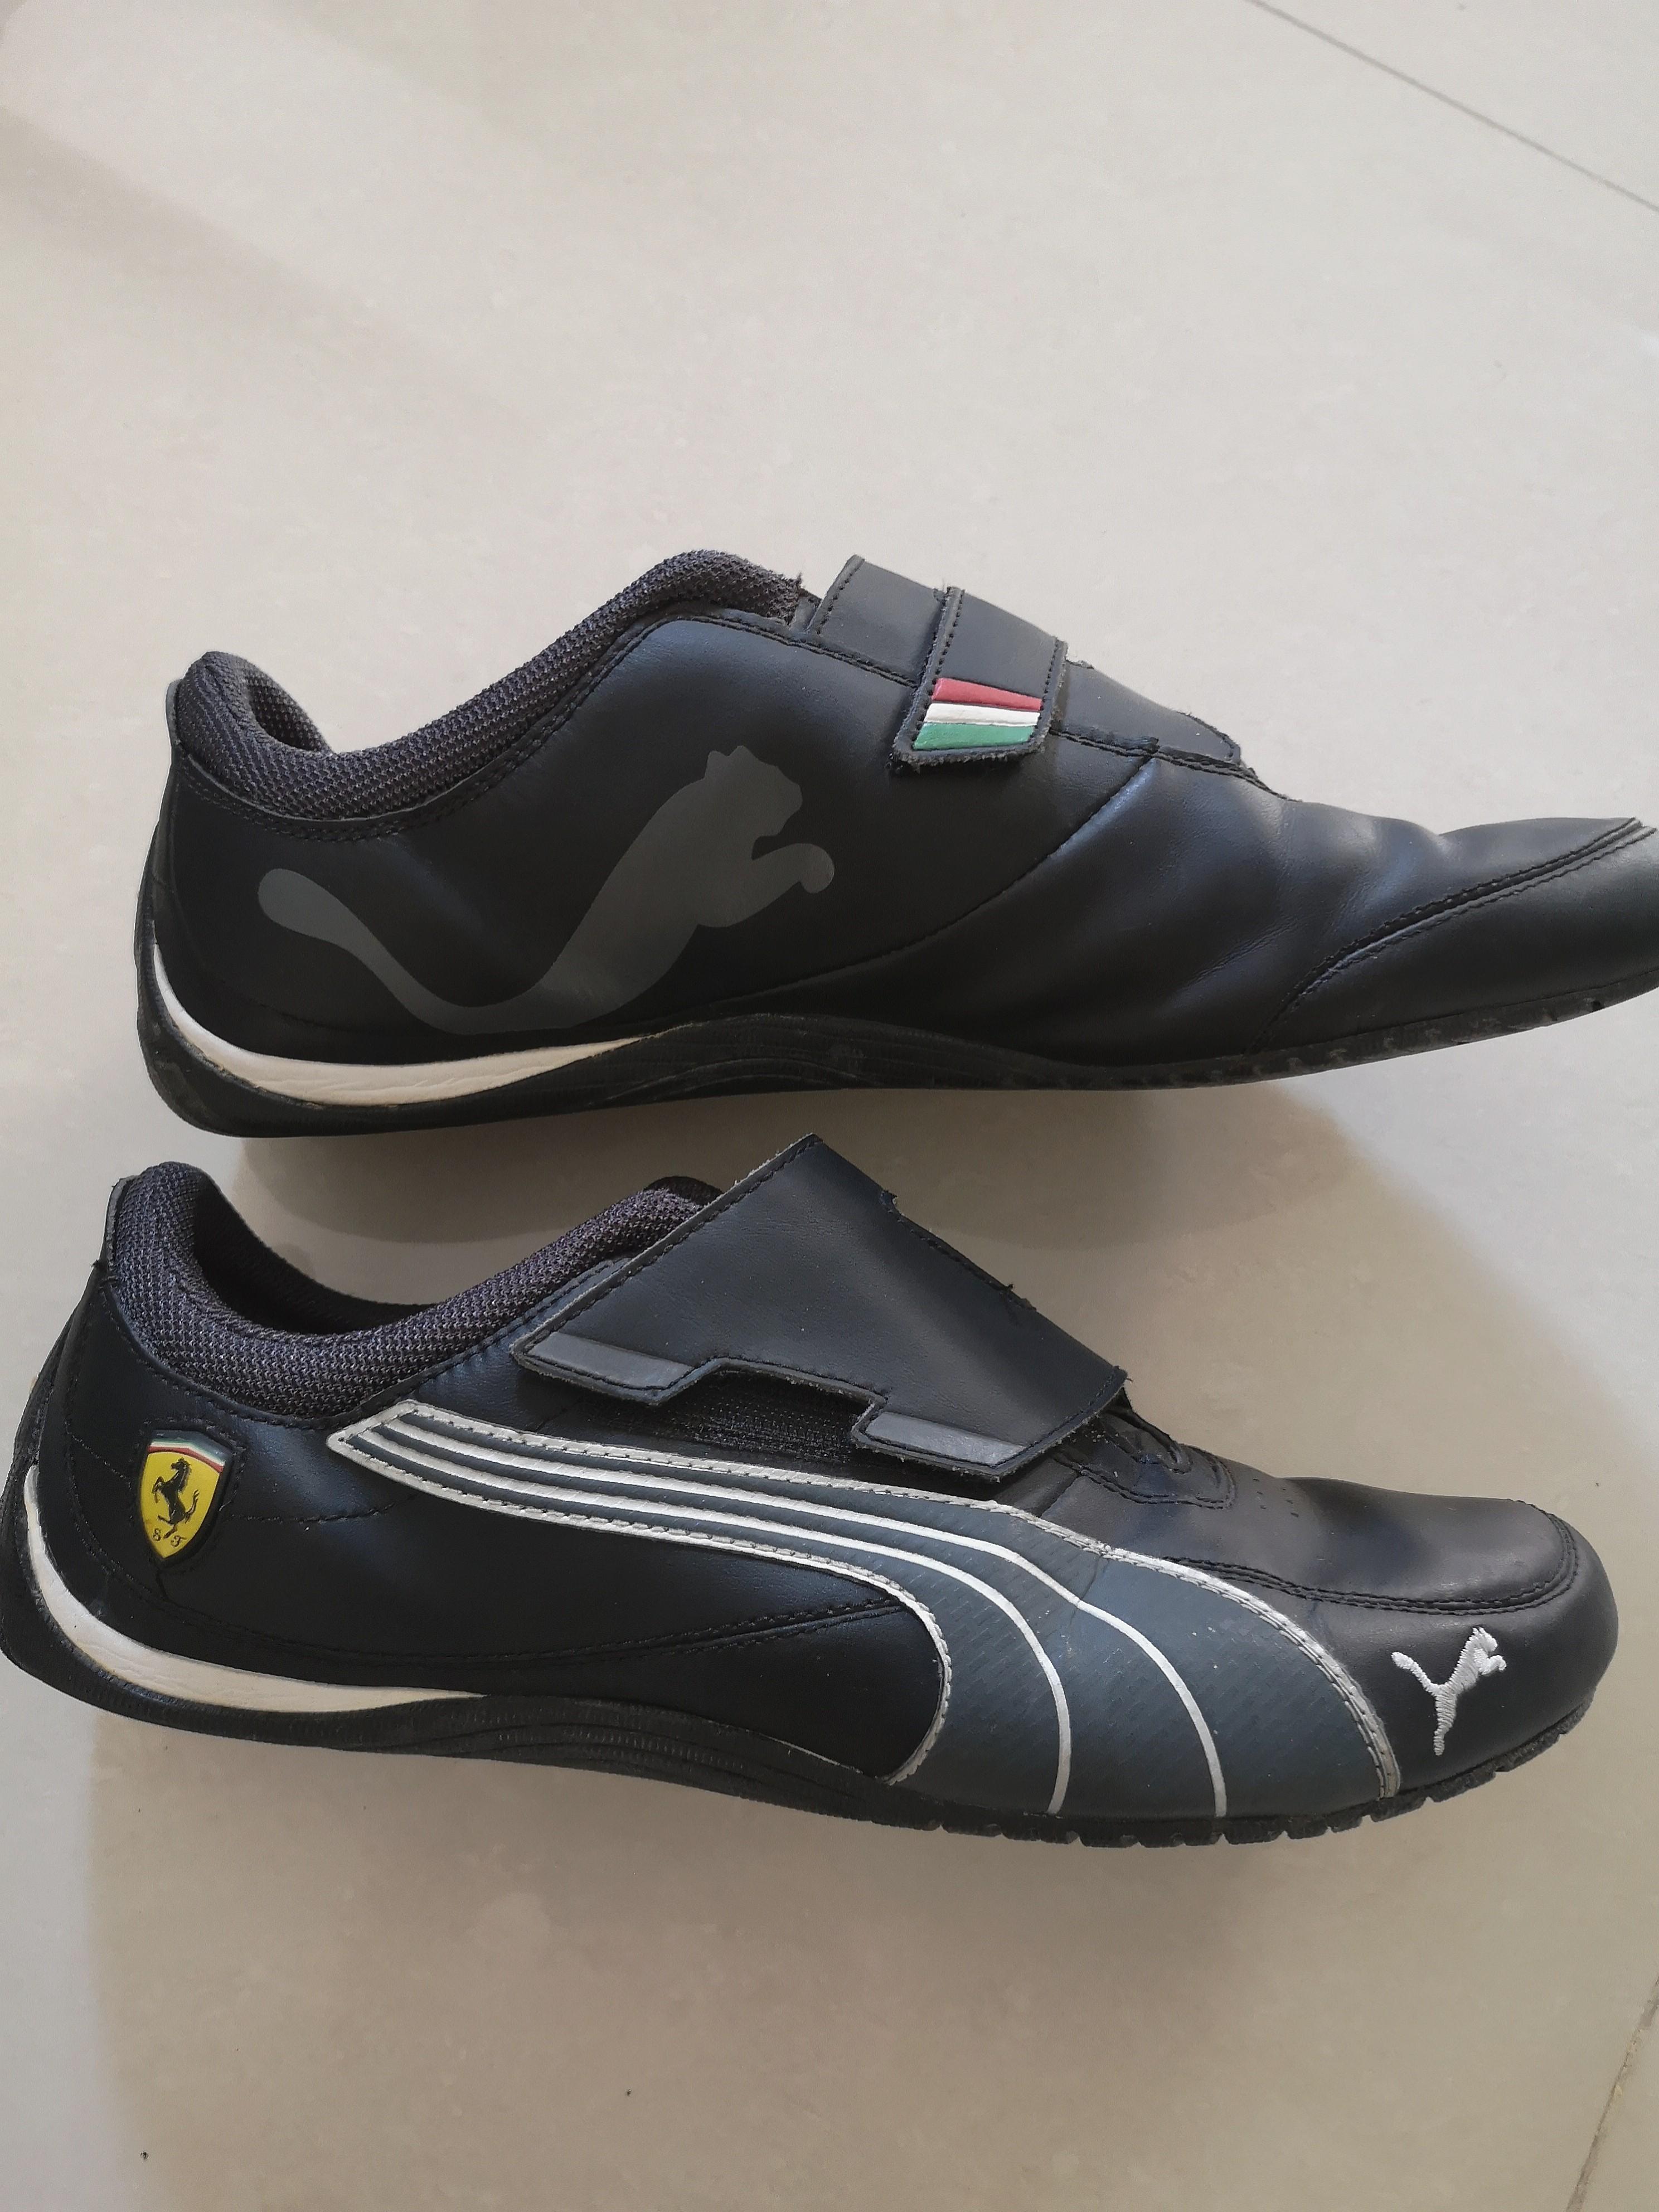 ferrari future kart cat men's motorsport shoes